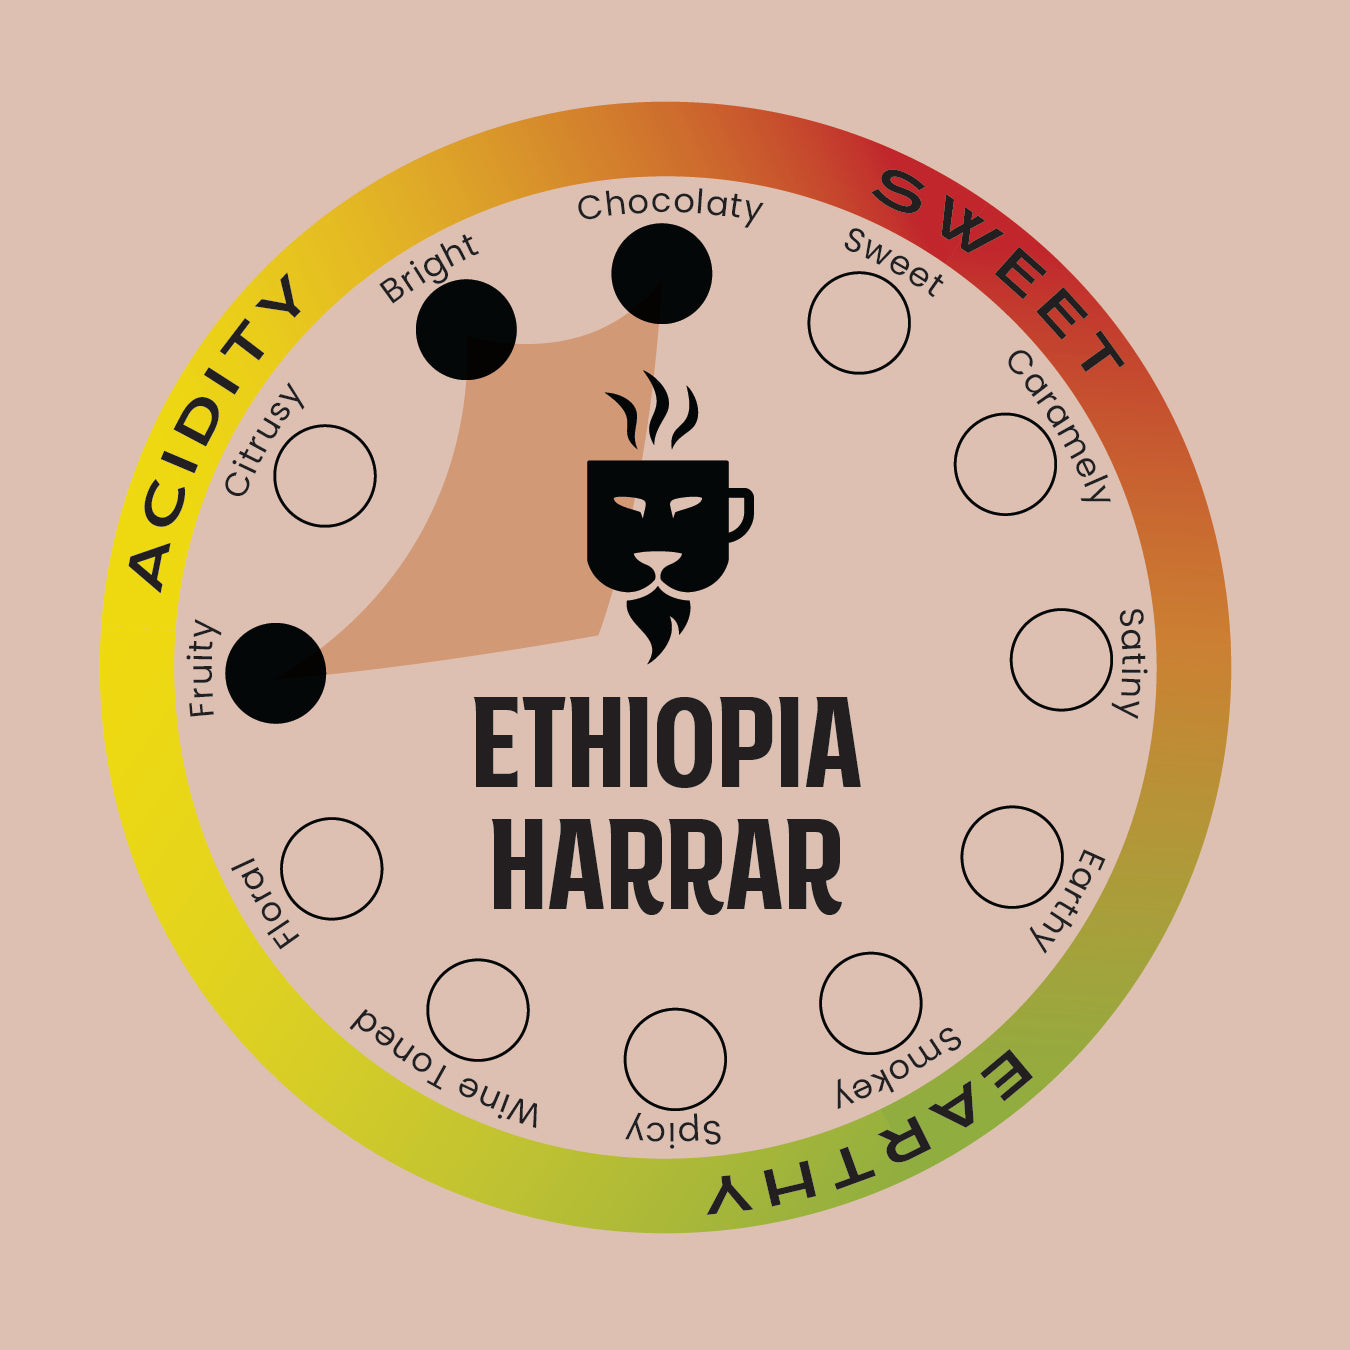 ETHIOPIAN HARRAR COFFEE